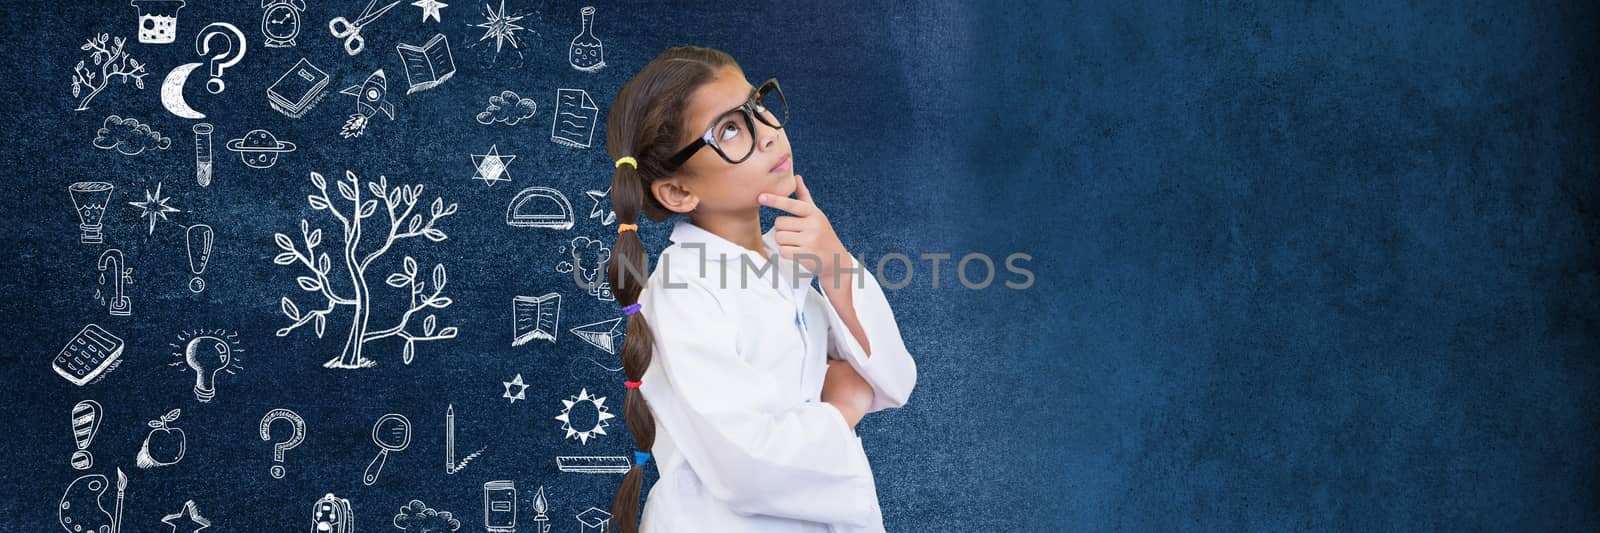 School girl scientist and Education drawing on blackboard for school by Wavebreakmedia